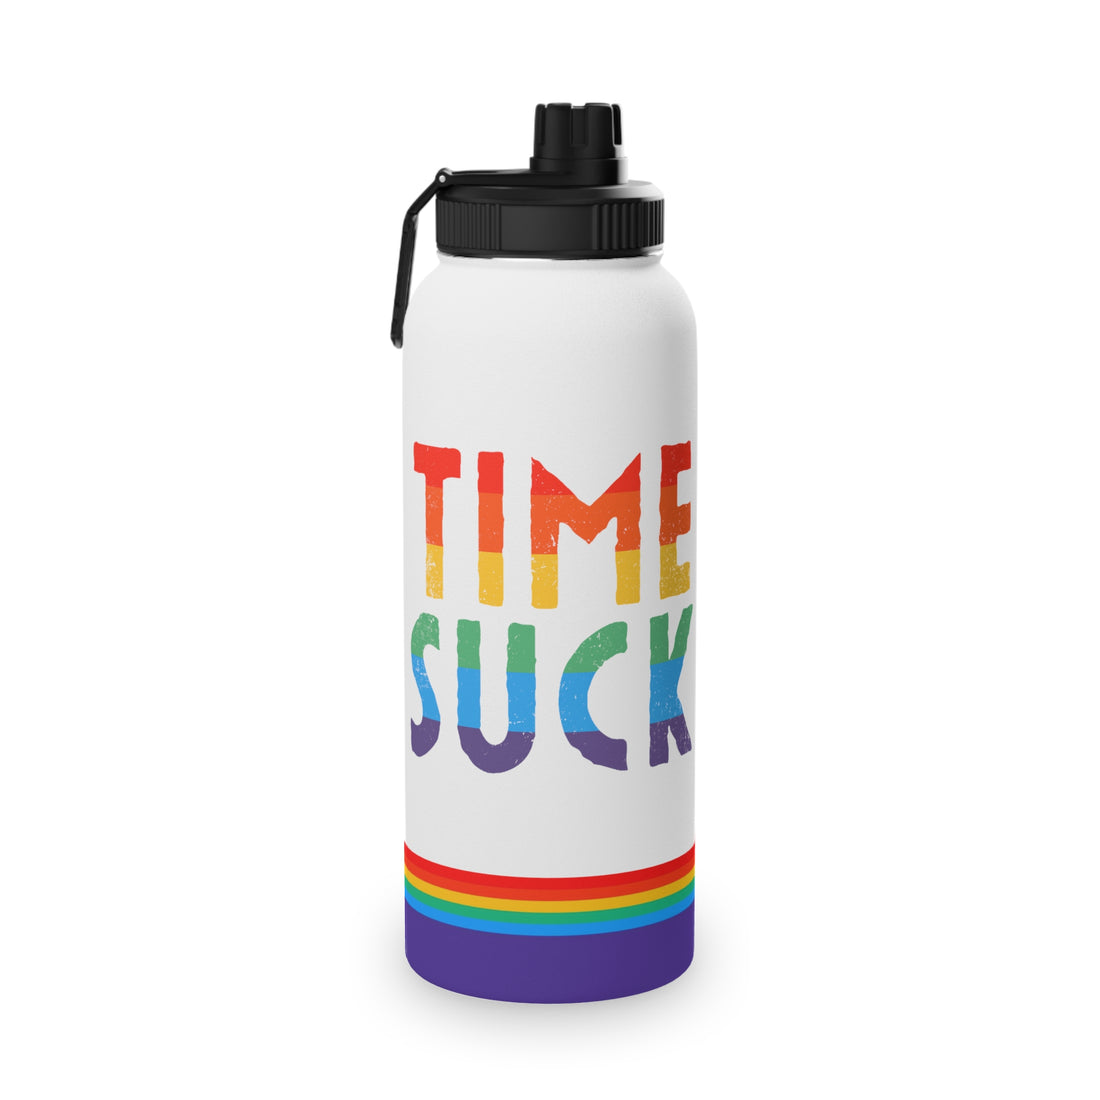 Timesuck Pride Stainless Steel Water Bottle